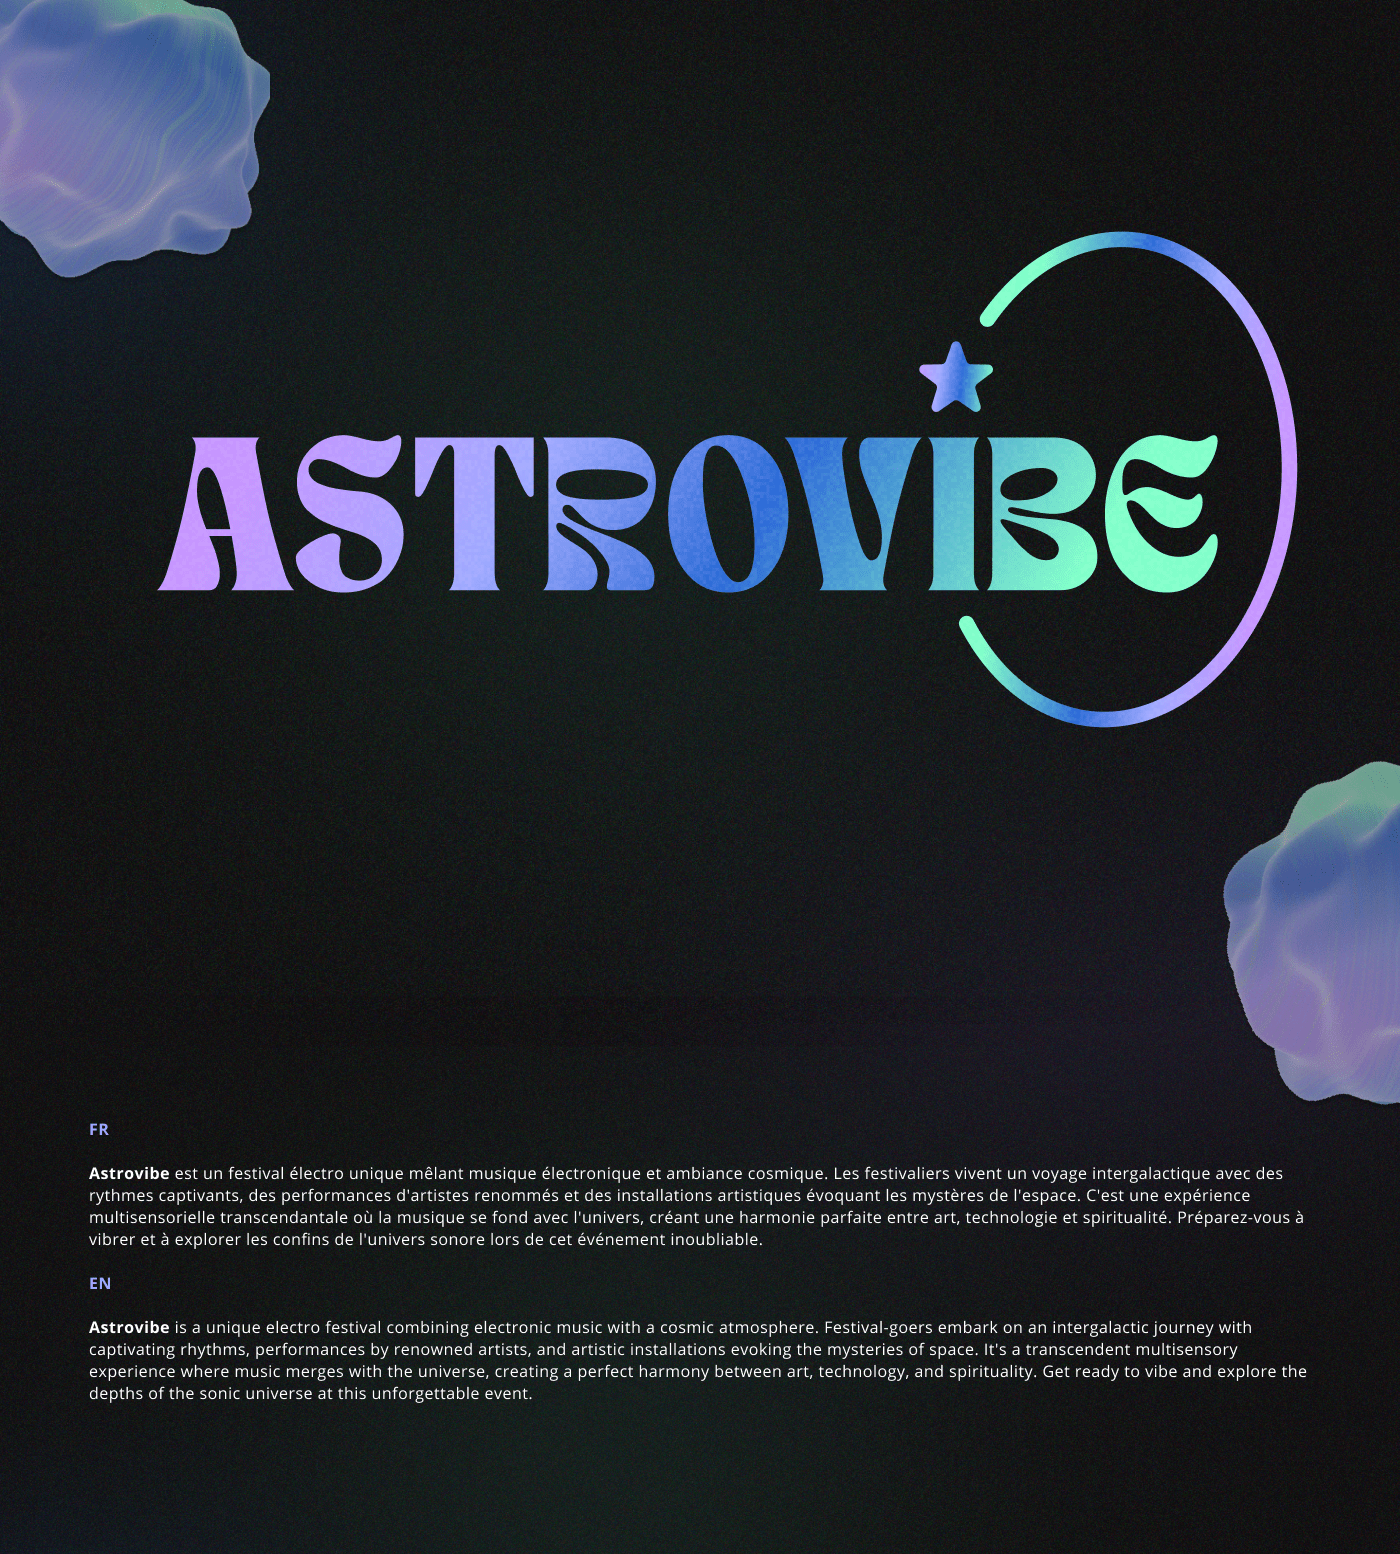 festival music Astro cosmos universe galaxy identity identidade visual logo brand identity